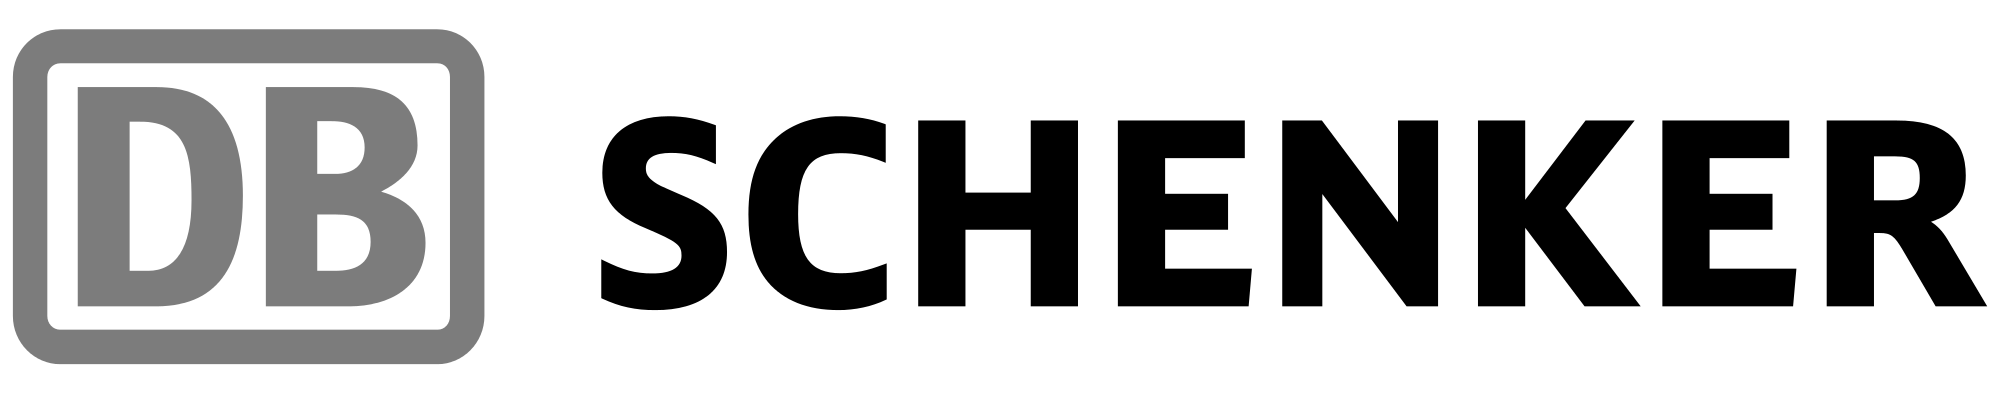 schenker company logo